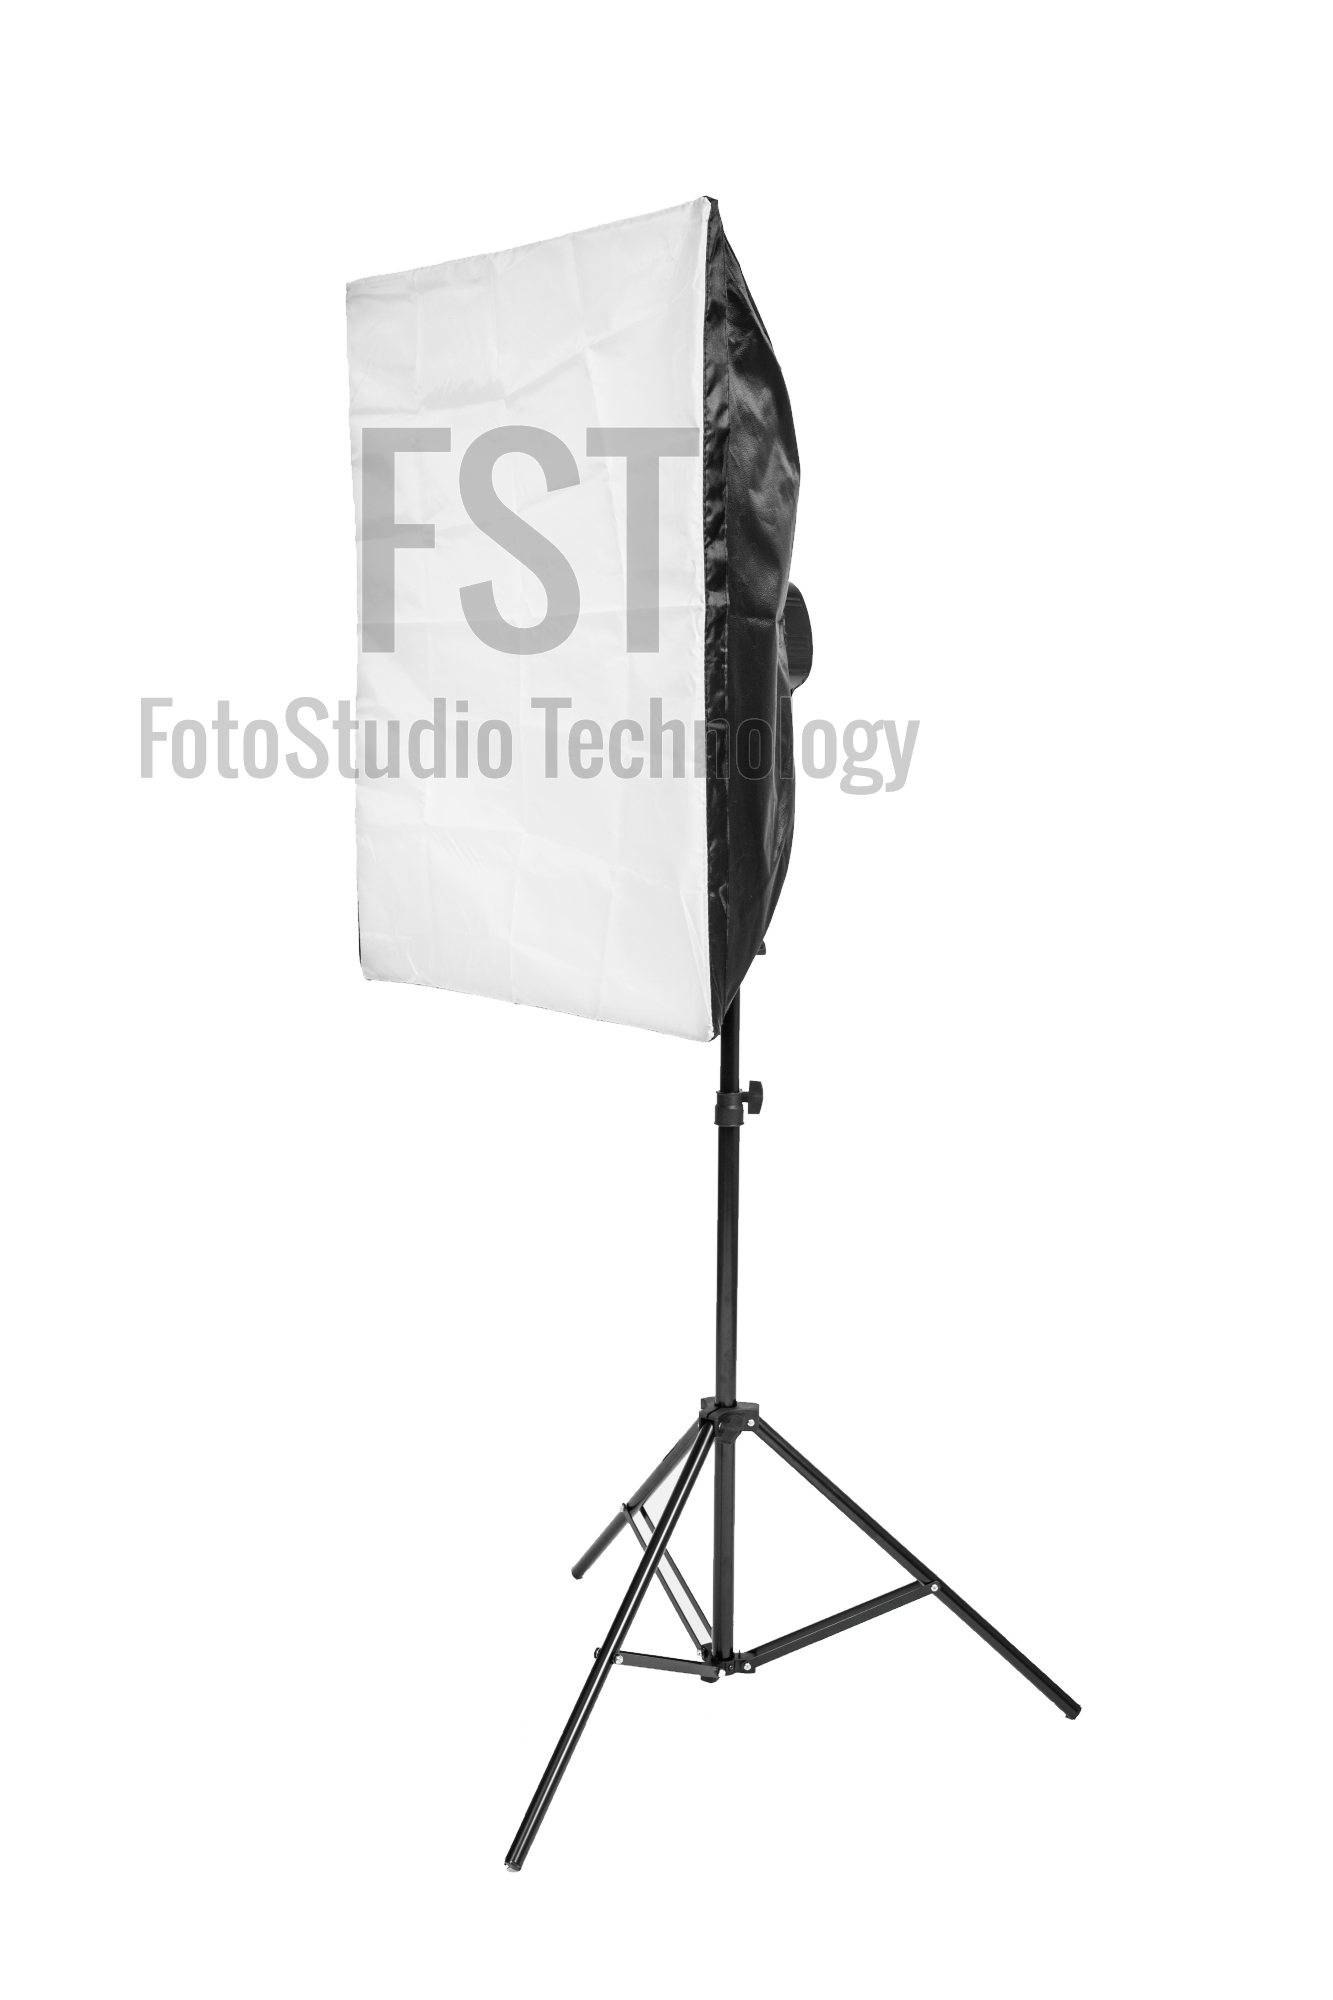 Комплект импульсного света FST E-250 Softbox Kit + радиосинхронизатор FST VC-604DC в подарок!